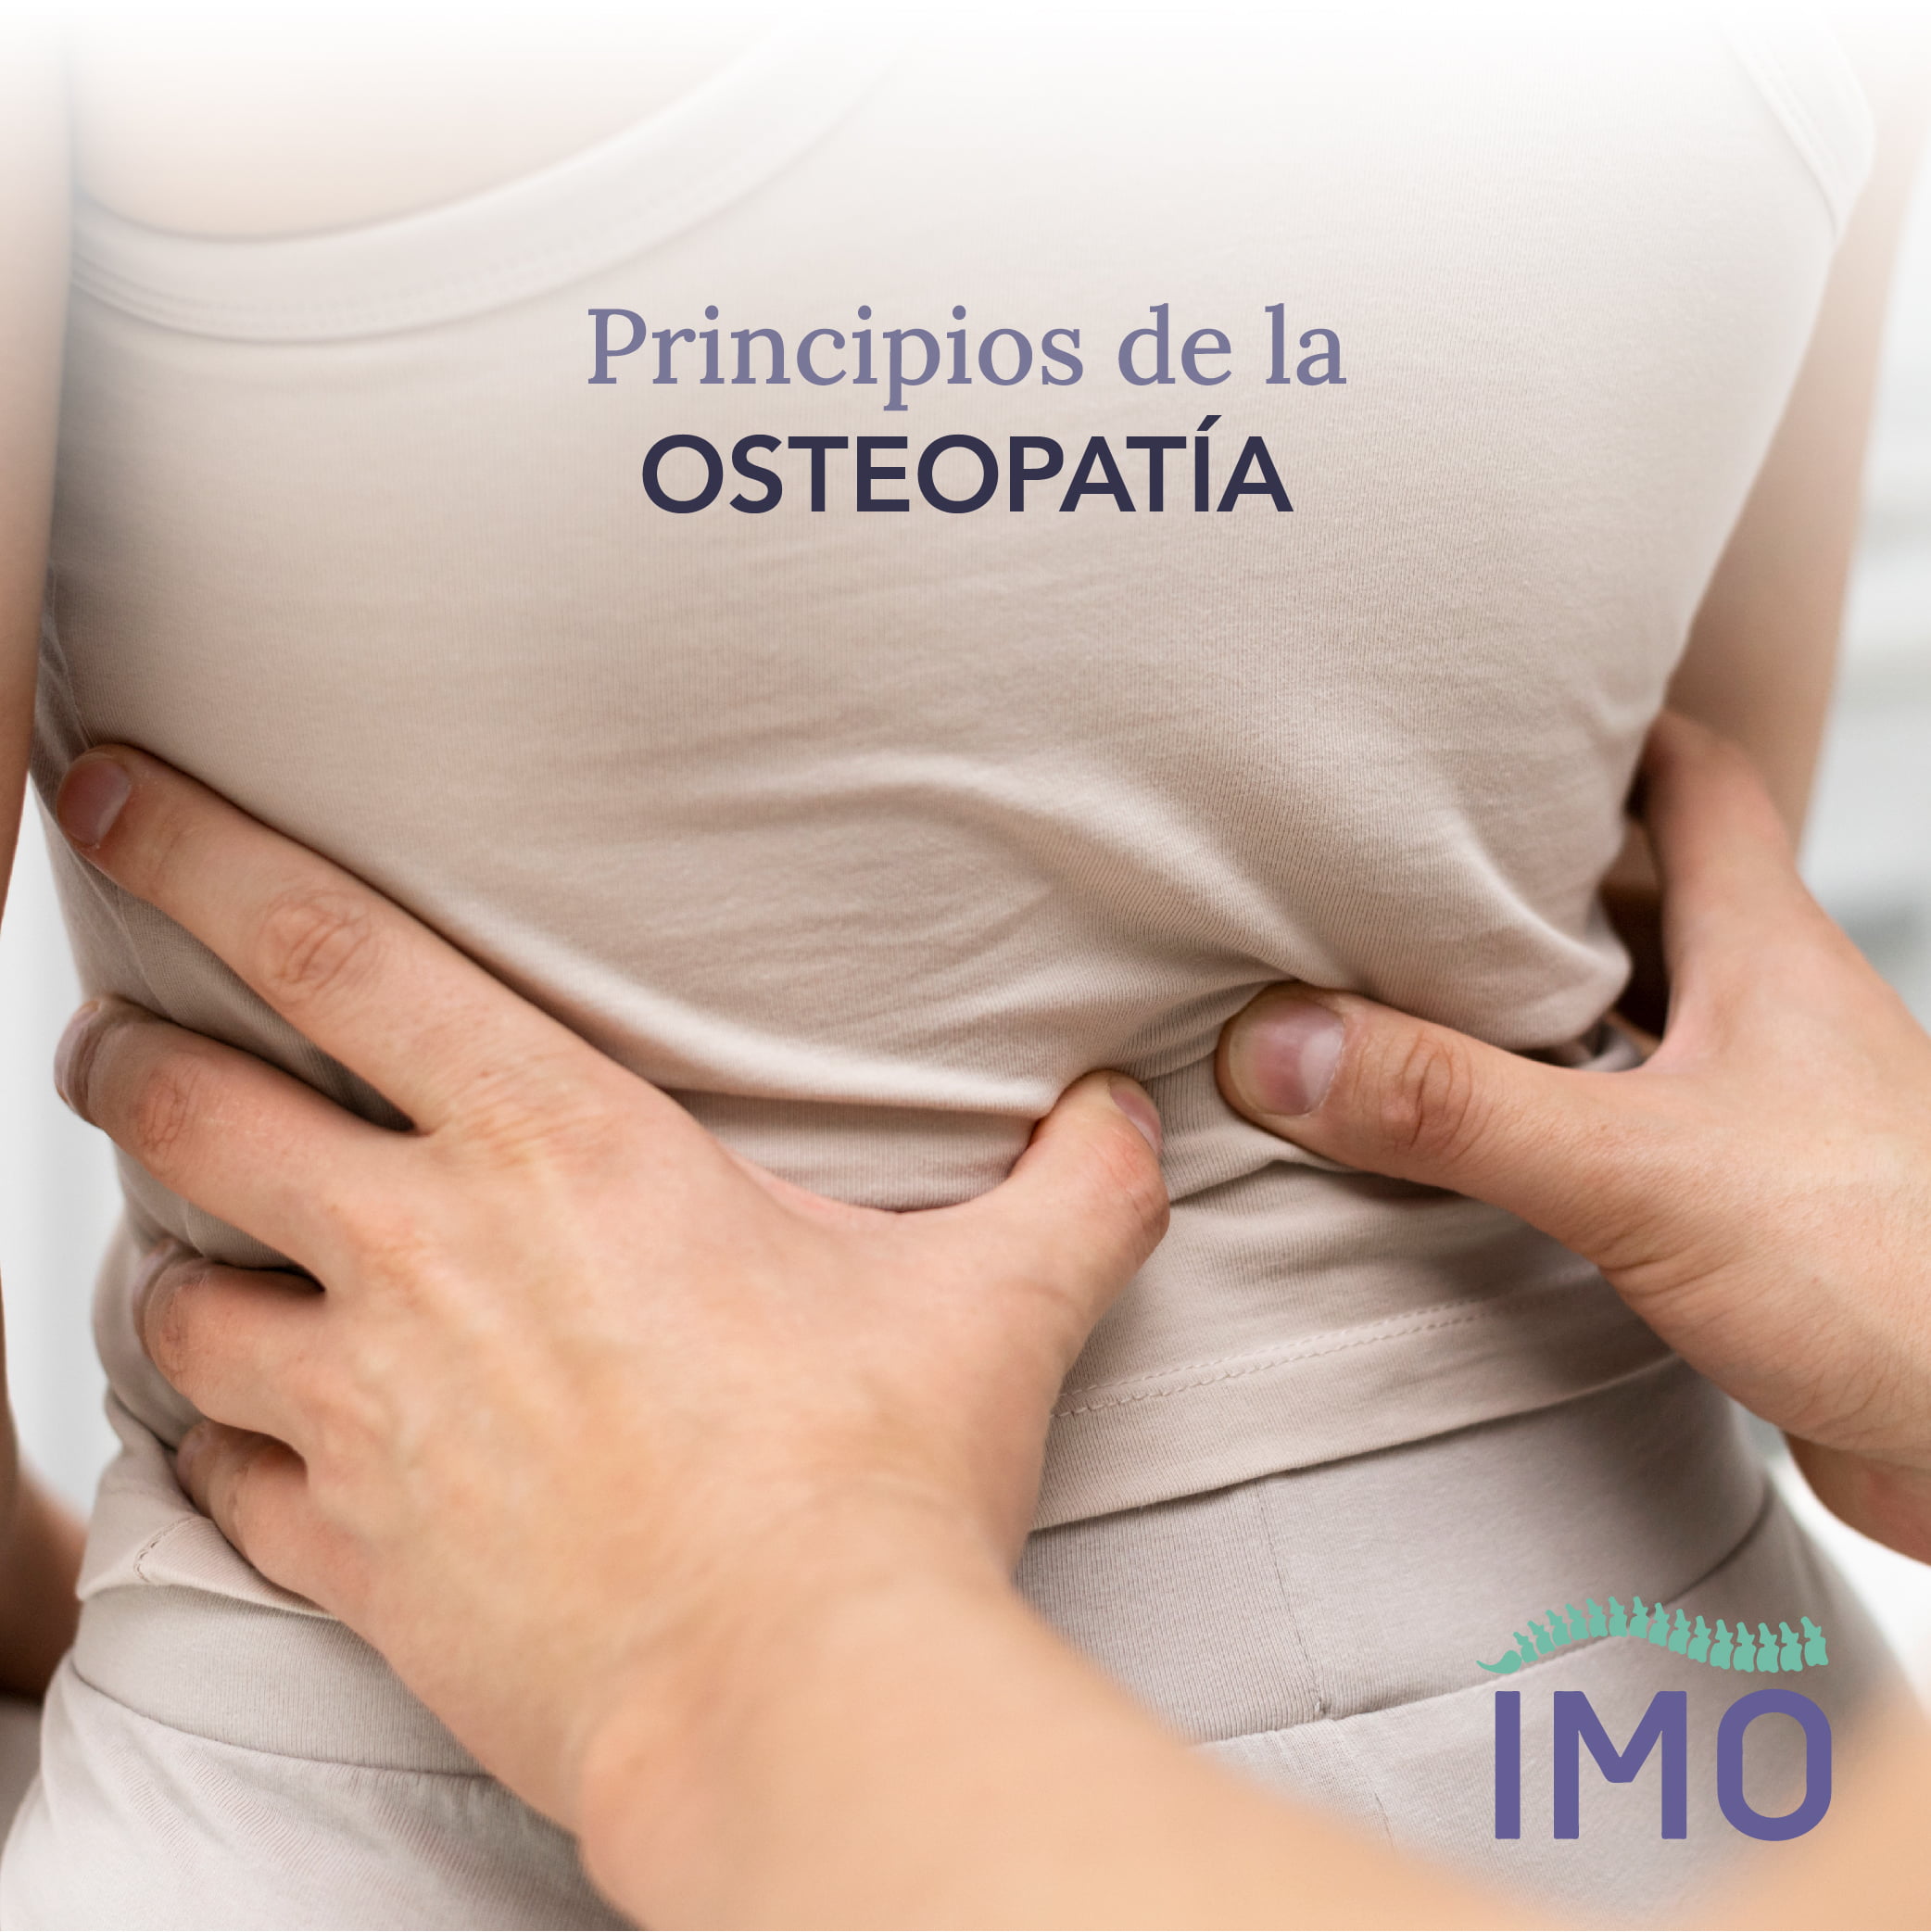 Principios de la osteopatia